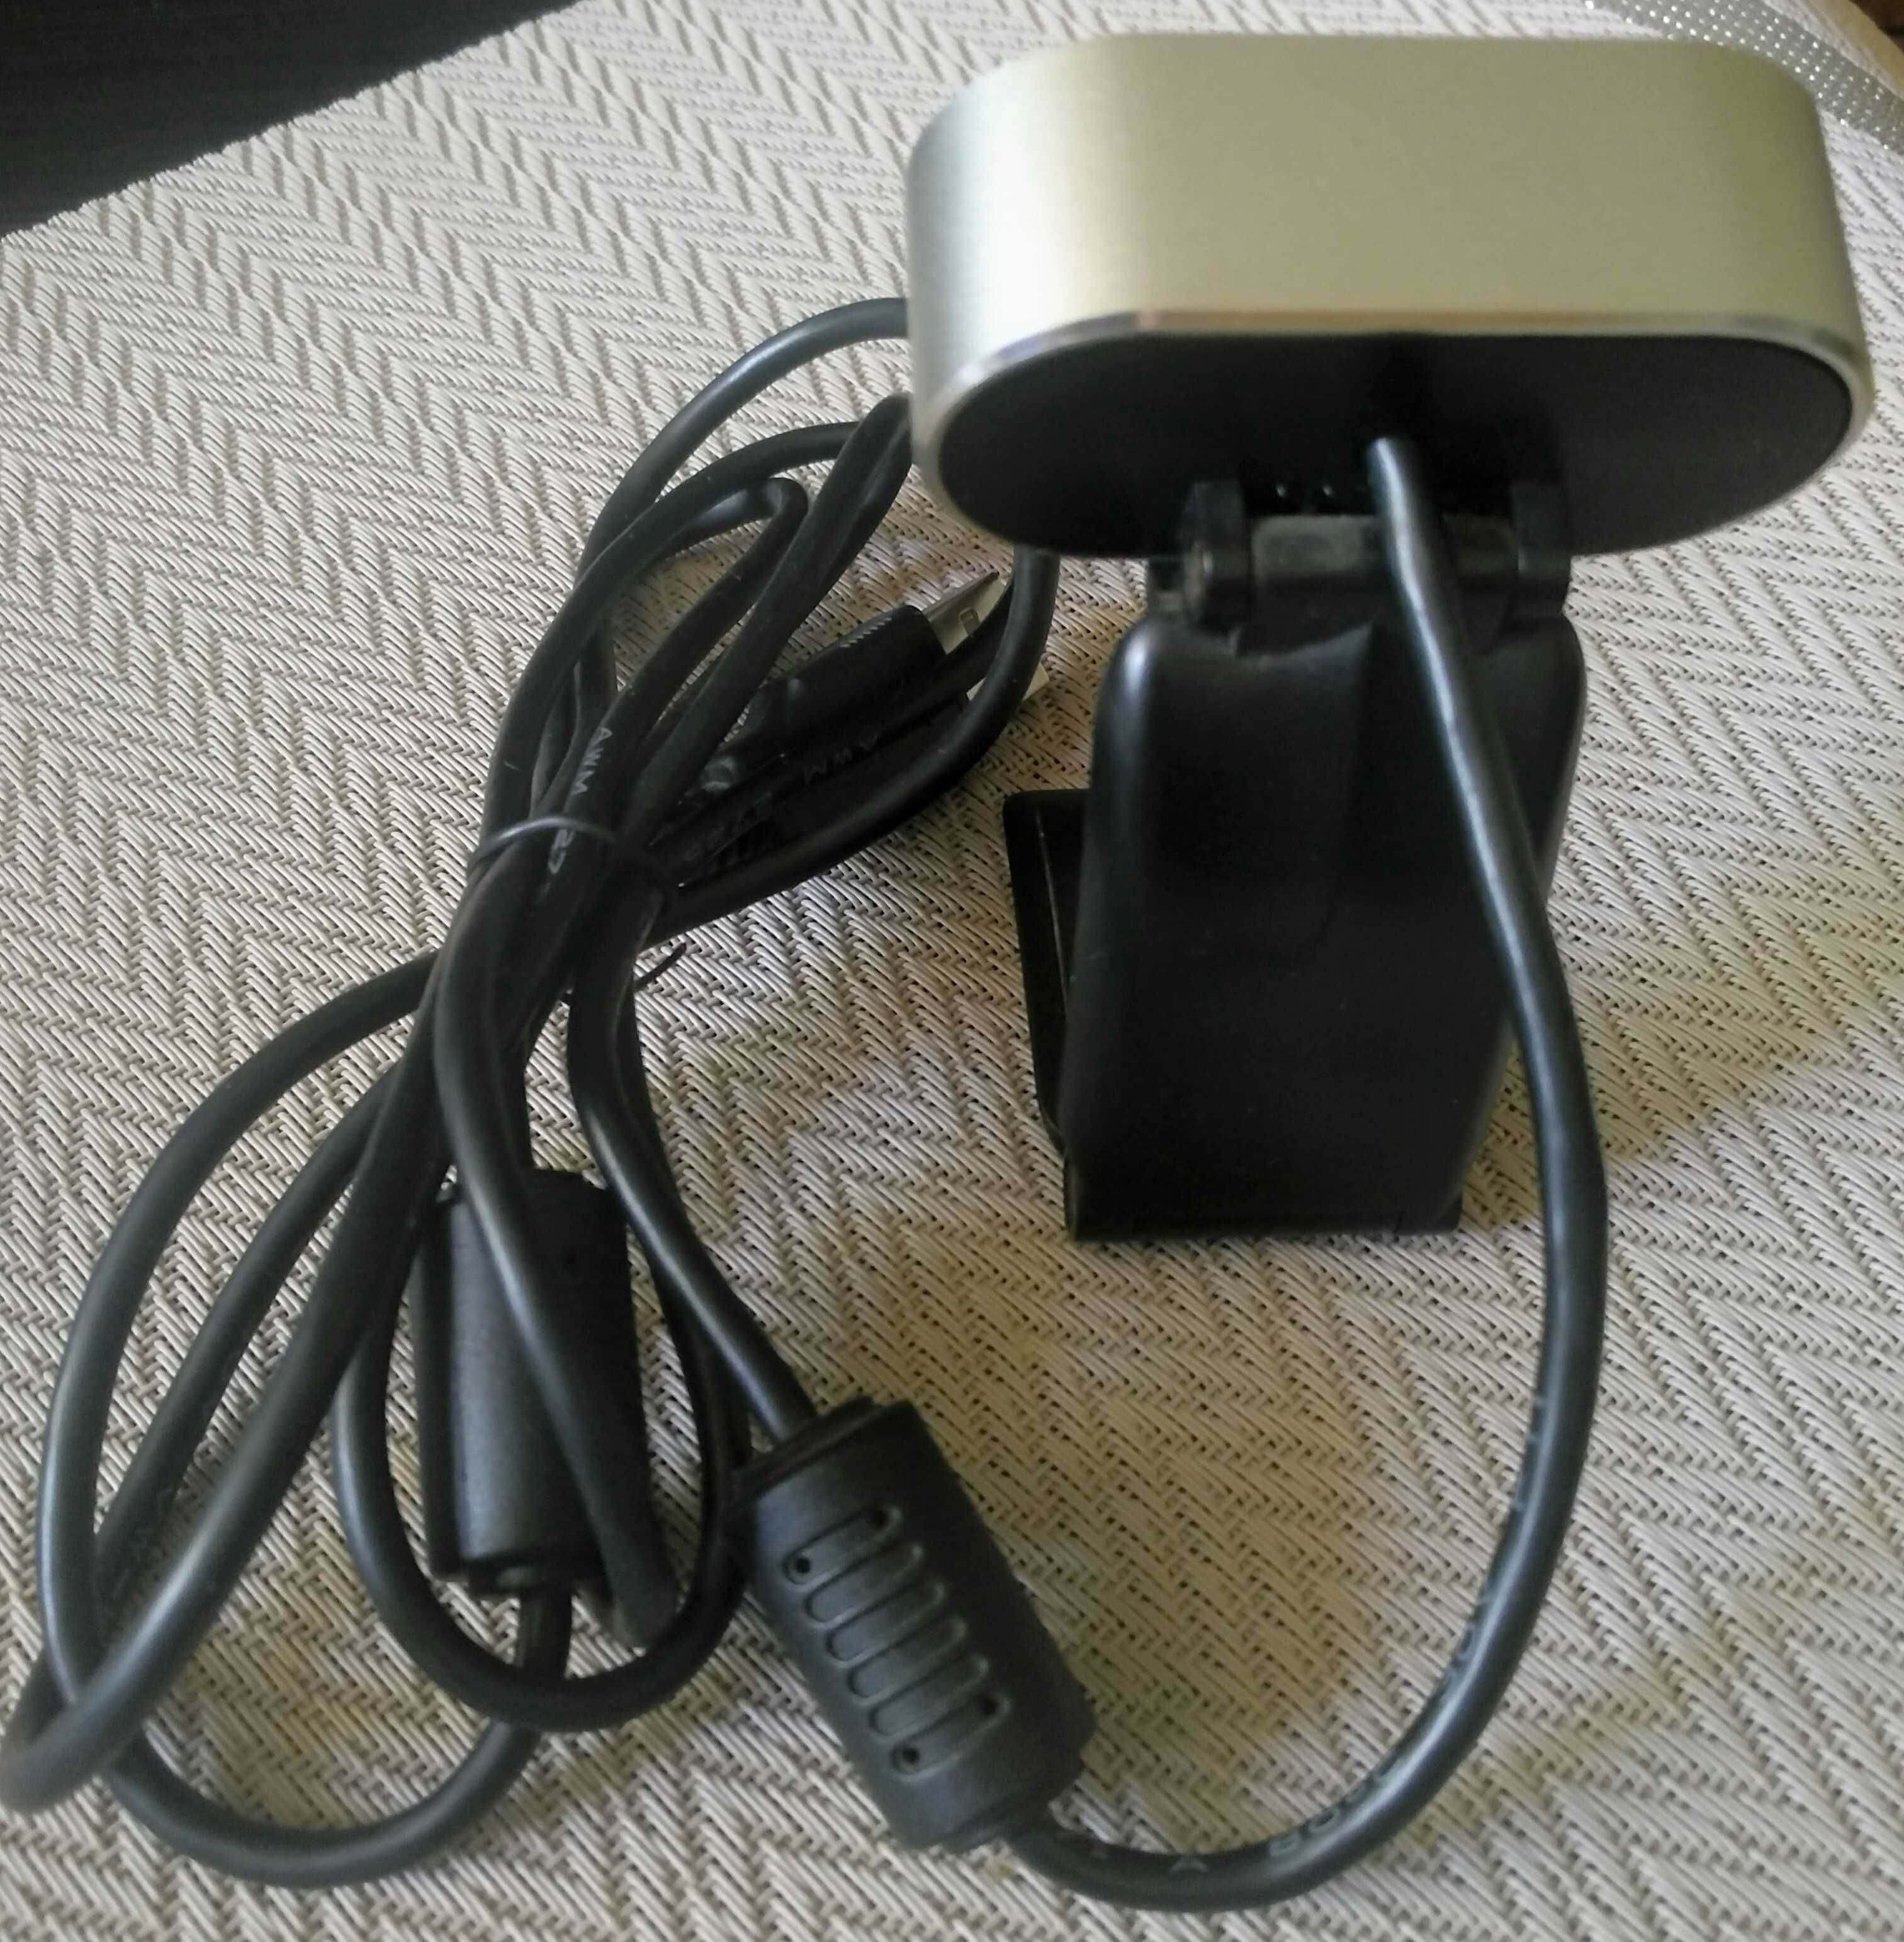 Kamera Full HD Zelman Internetowa USB wbudowany mikrofon  - NOWA